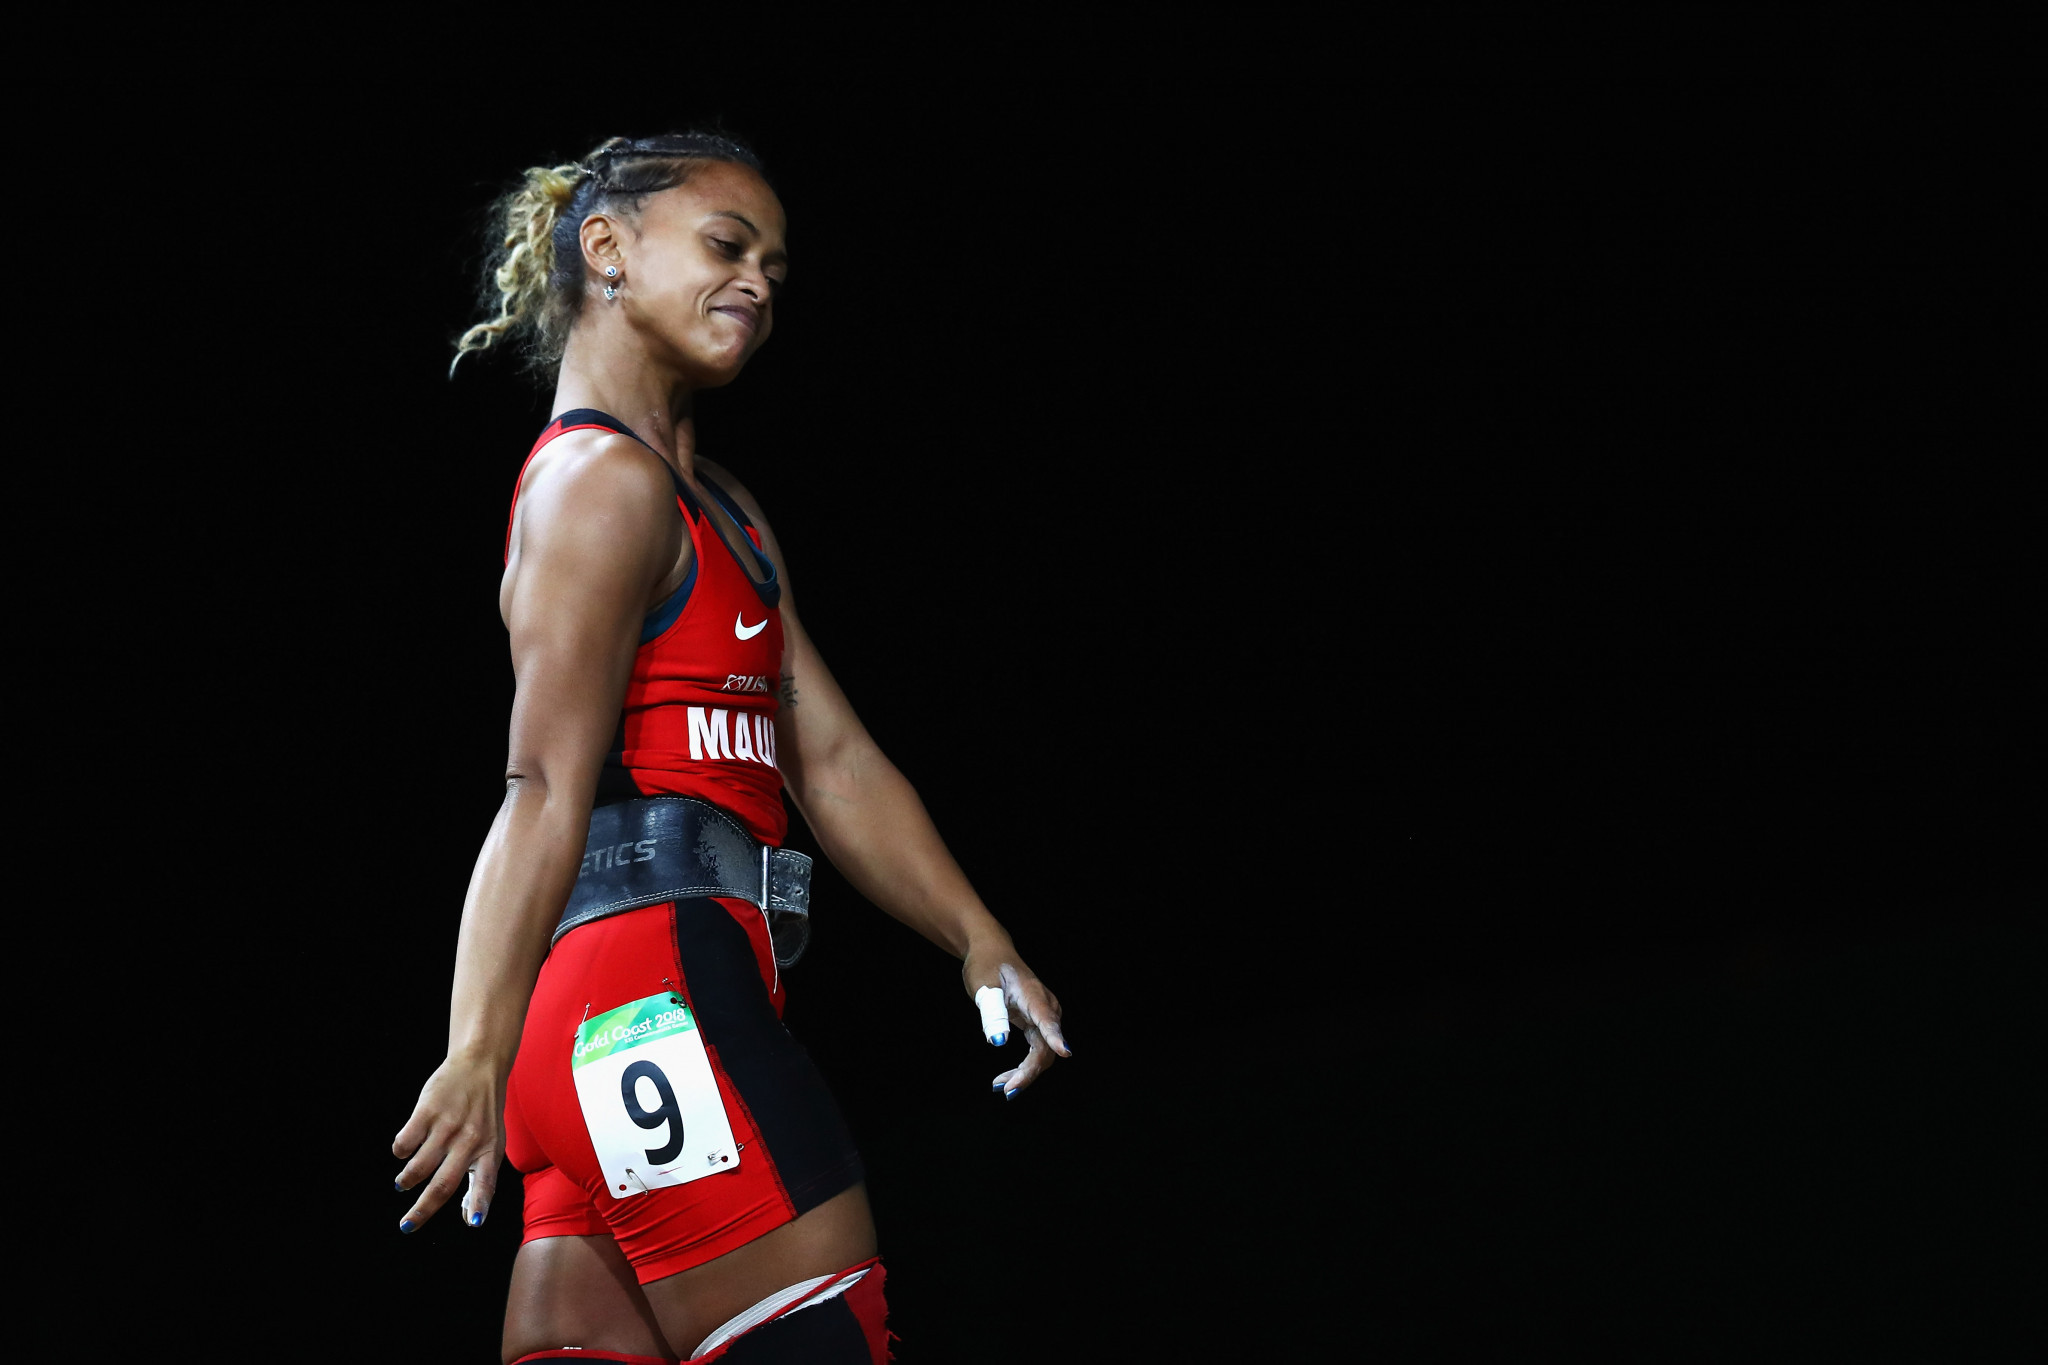 Gold Coast 2018 medallist Roilya Ranaivosoa is due to return in Birmingham ©Getty Images